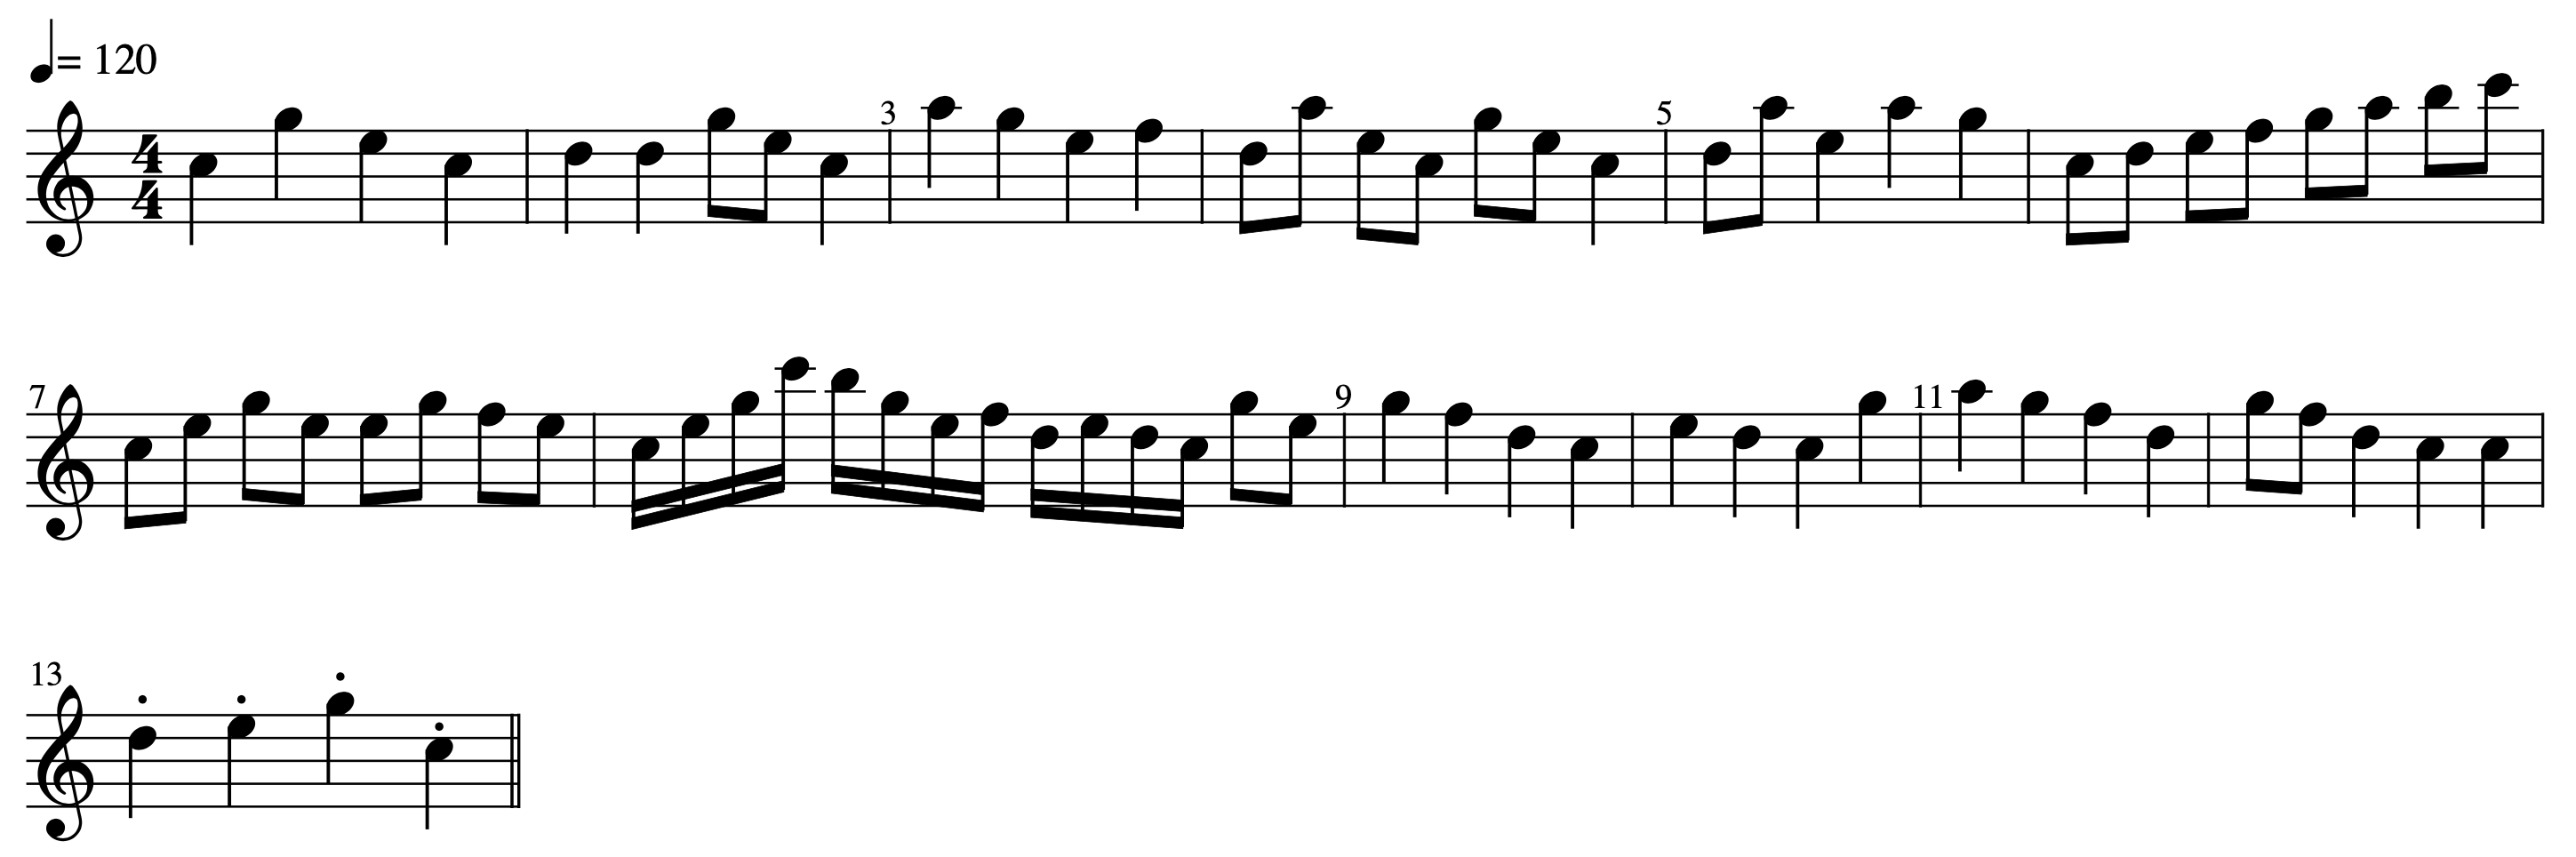 Melody in C Major Print Score